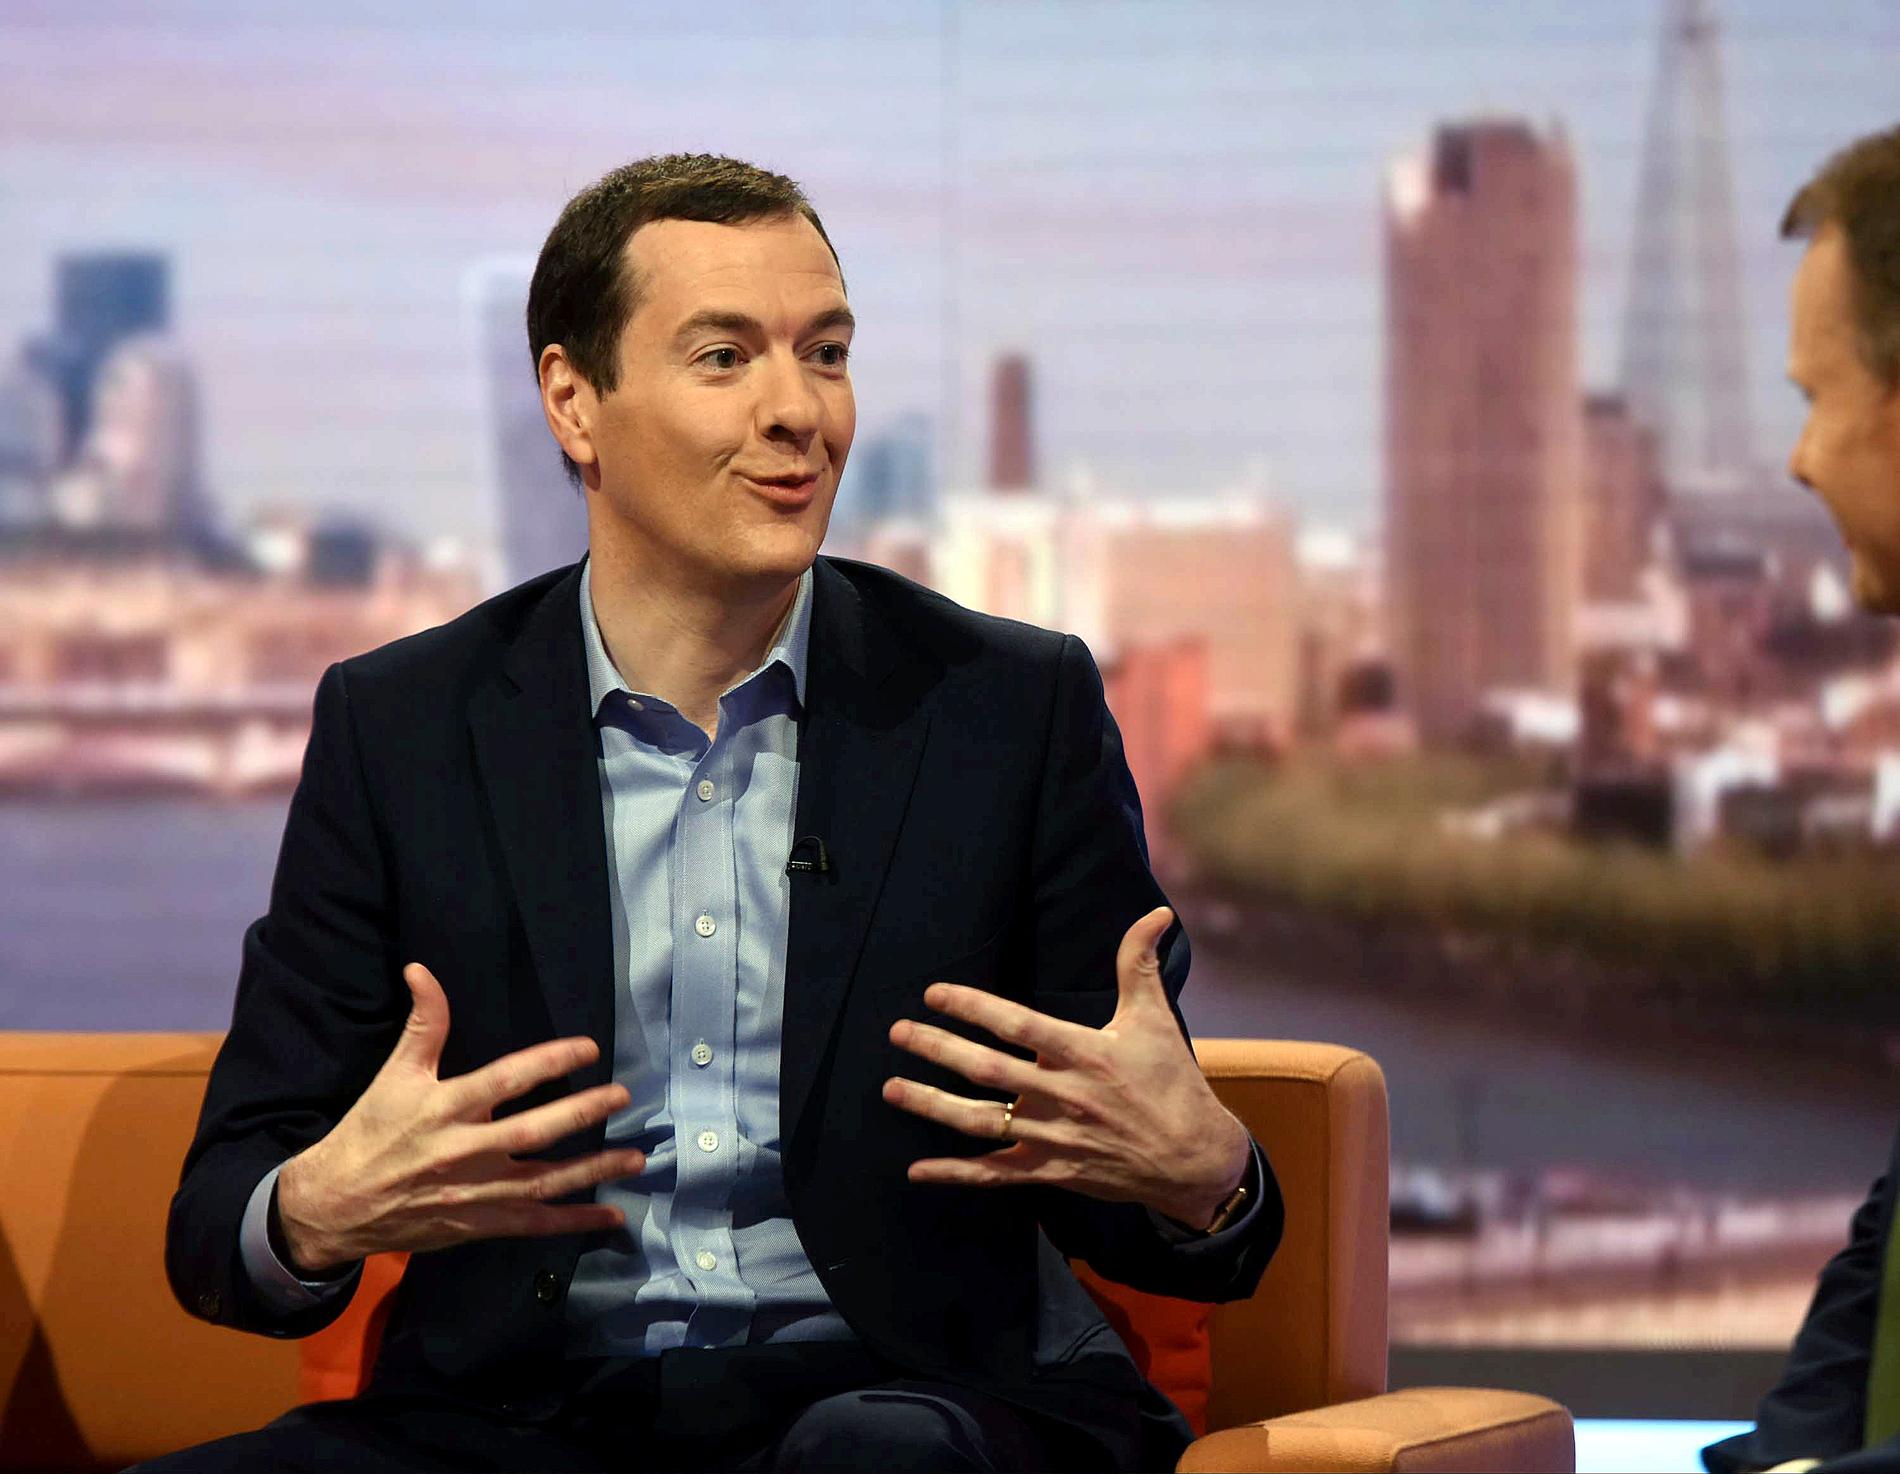 Evening Standards chefredaktör och tidigare finansministern George Osborne i BBC:s studio.